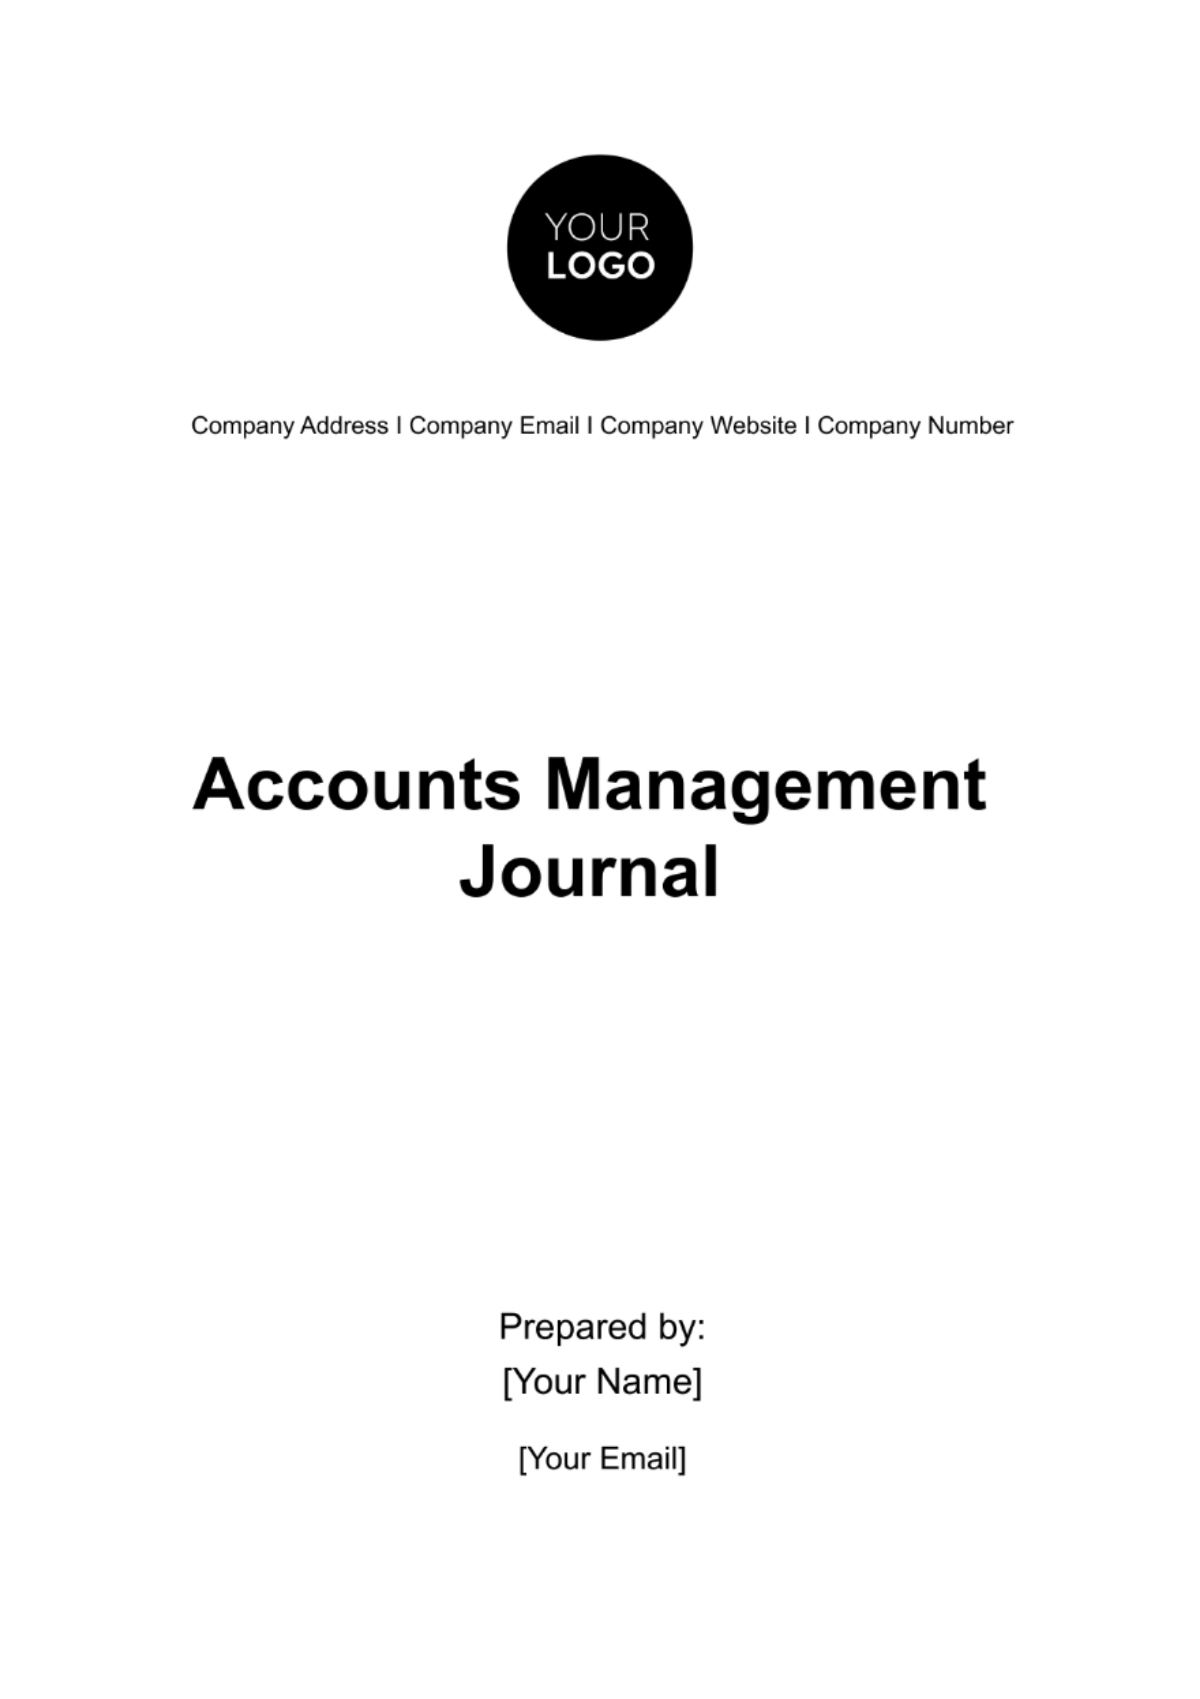 Accounts Management Journal Template